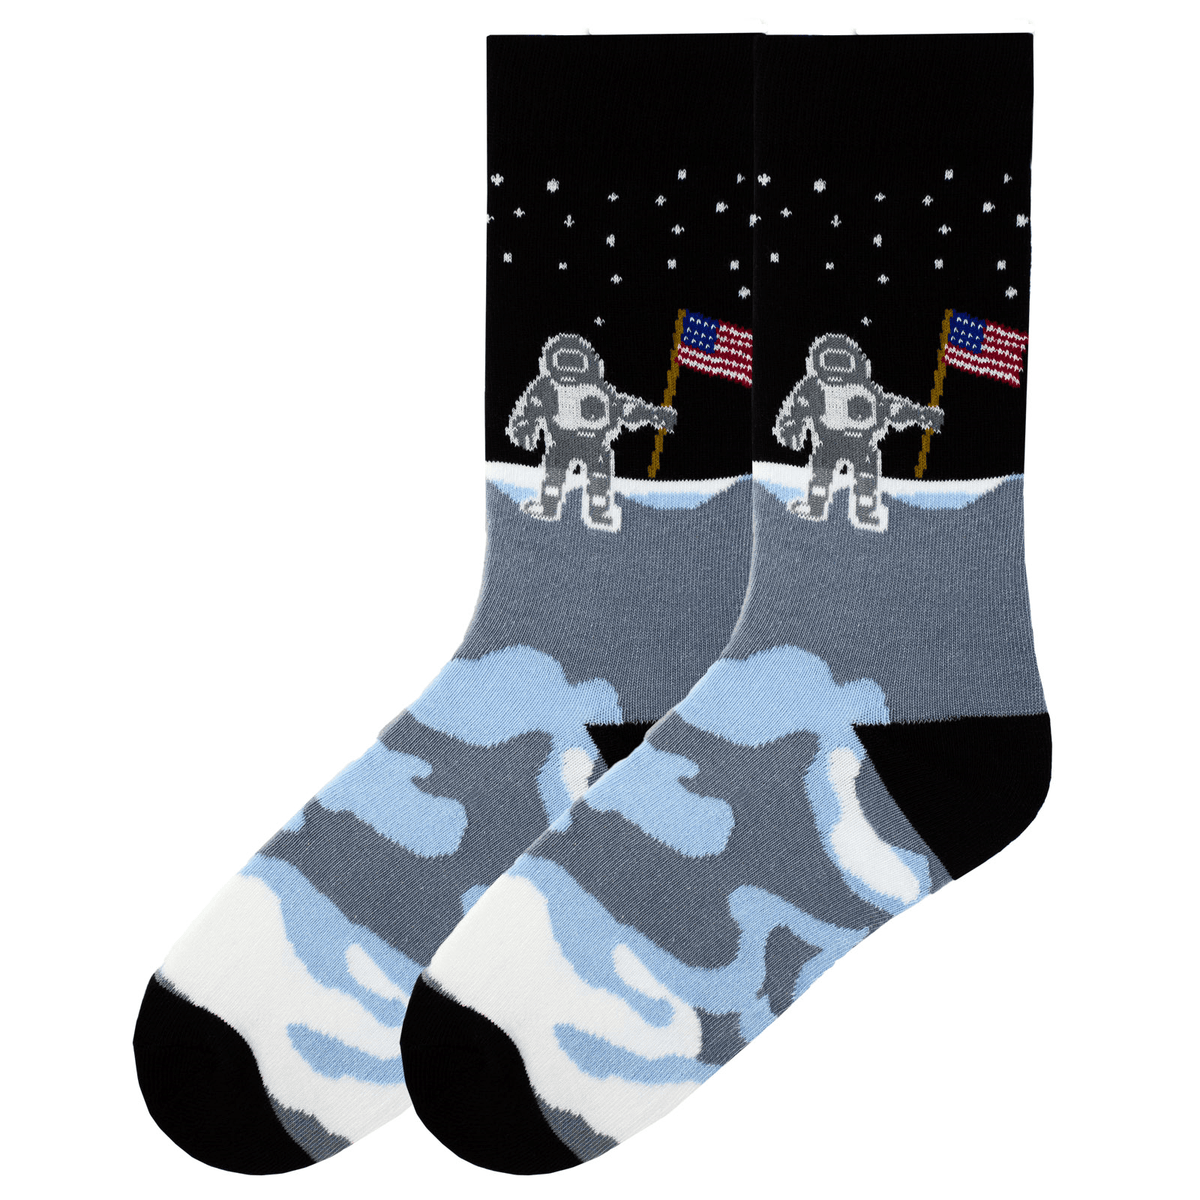 Man on the Moon Socks Men’s Crew Sock Black